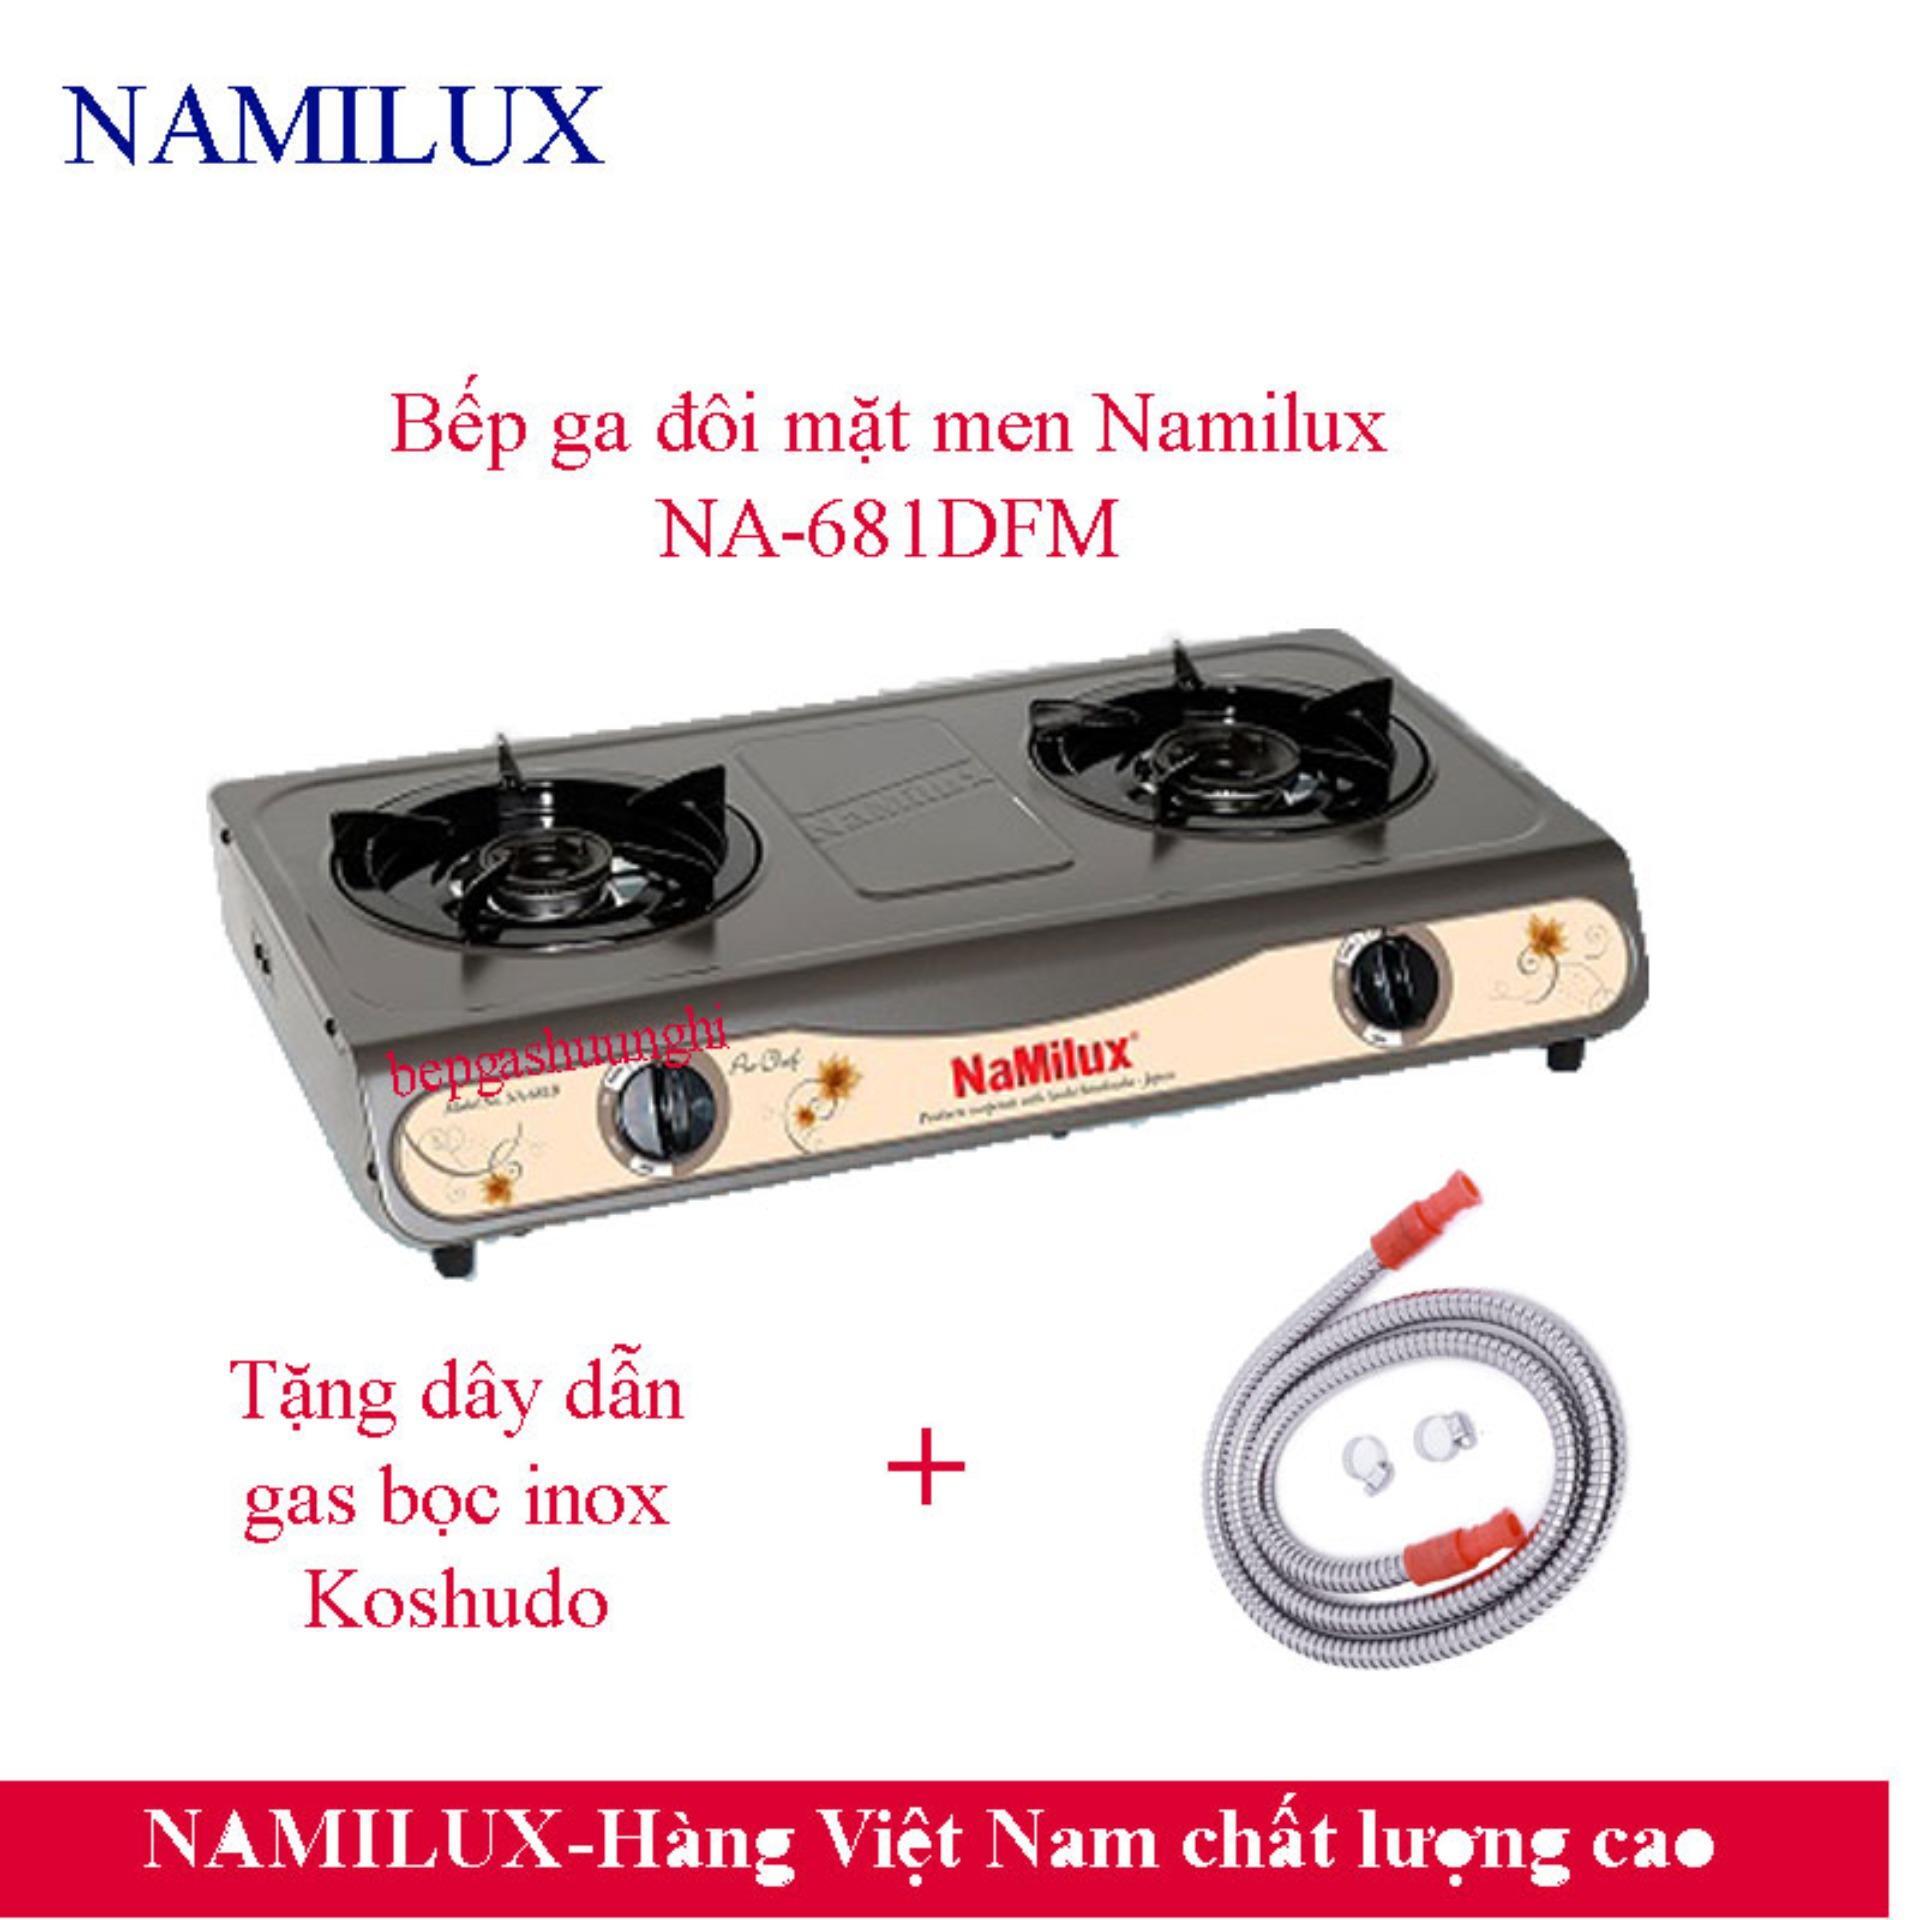 Bếp gas dương Namilux NA-681DFM